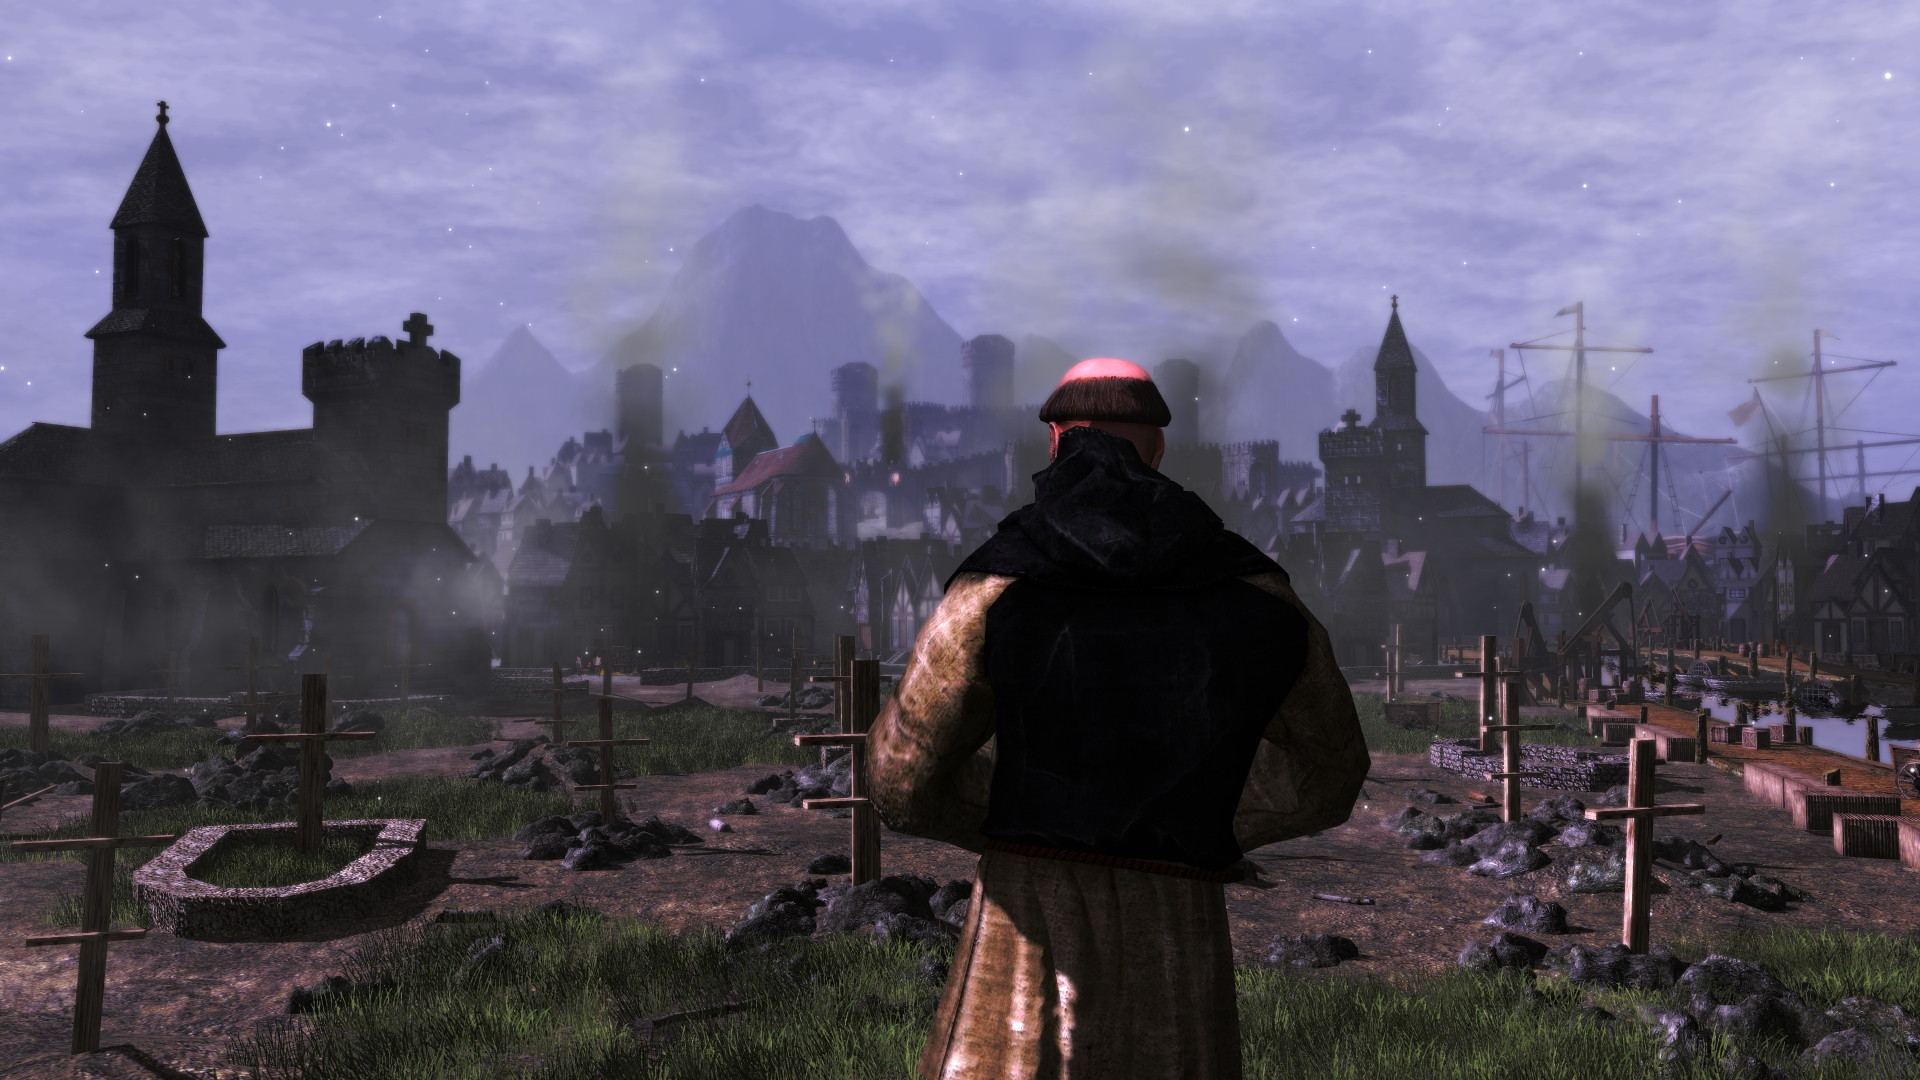 Kingdom Wars: The Plague Free Download